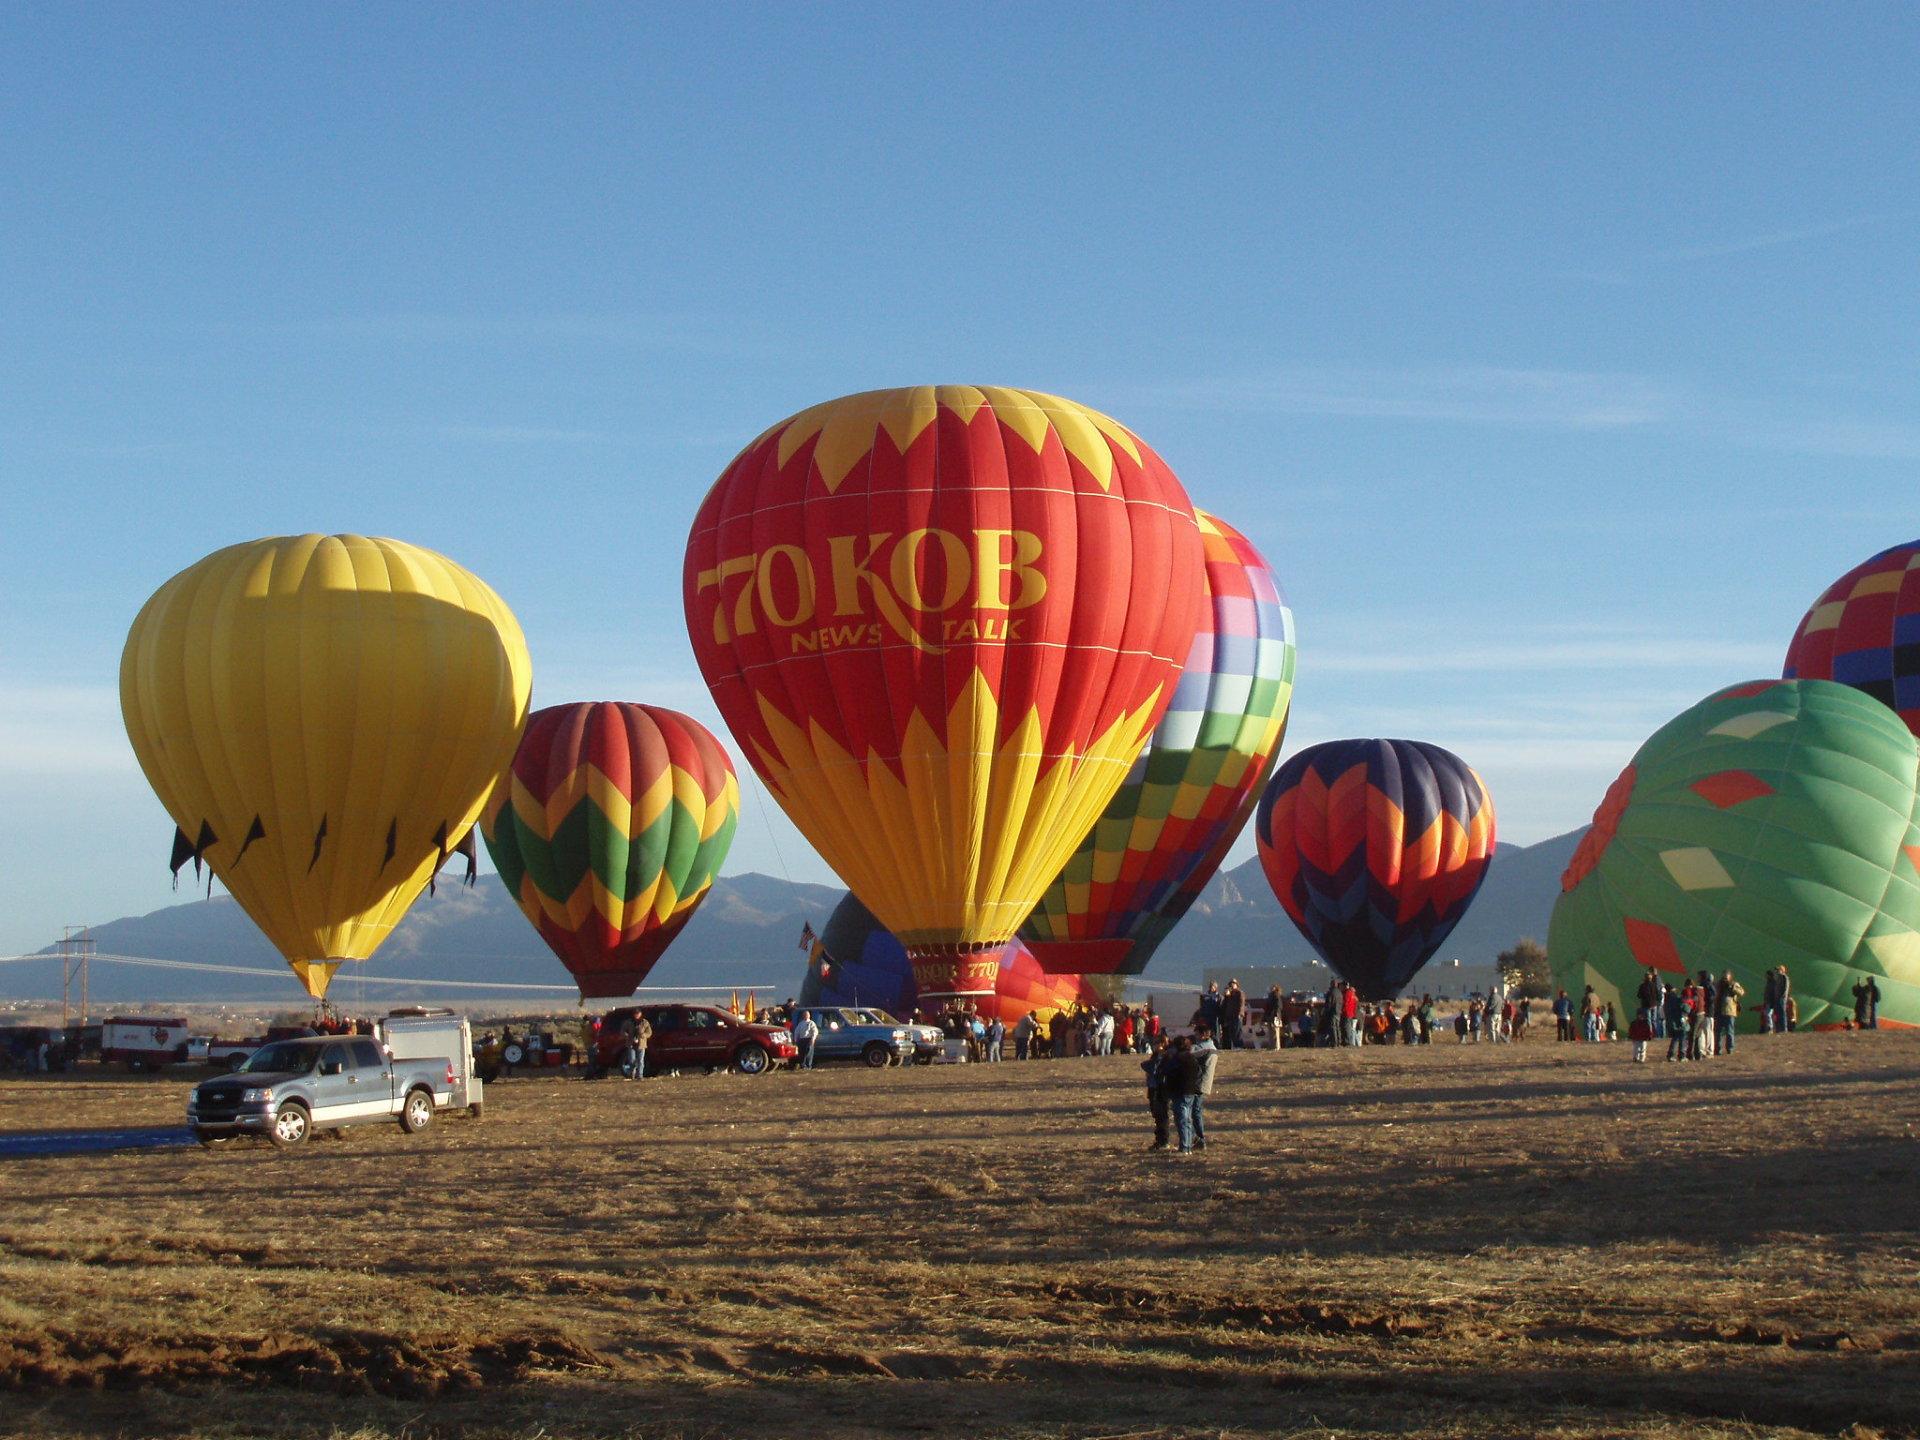 Taos Balloon Rally 2023 in New Mexico Dates